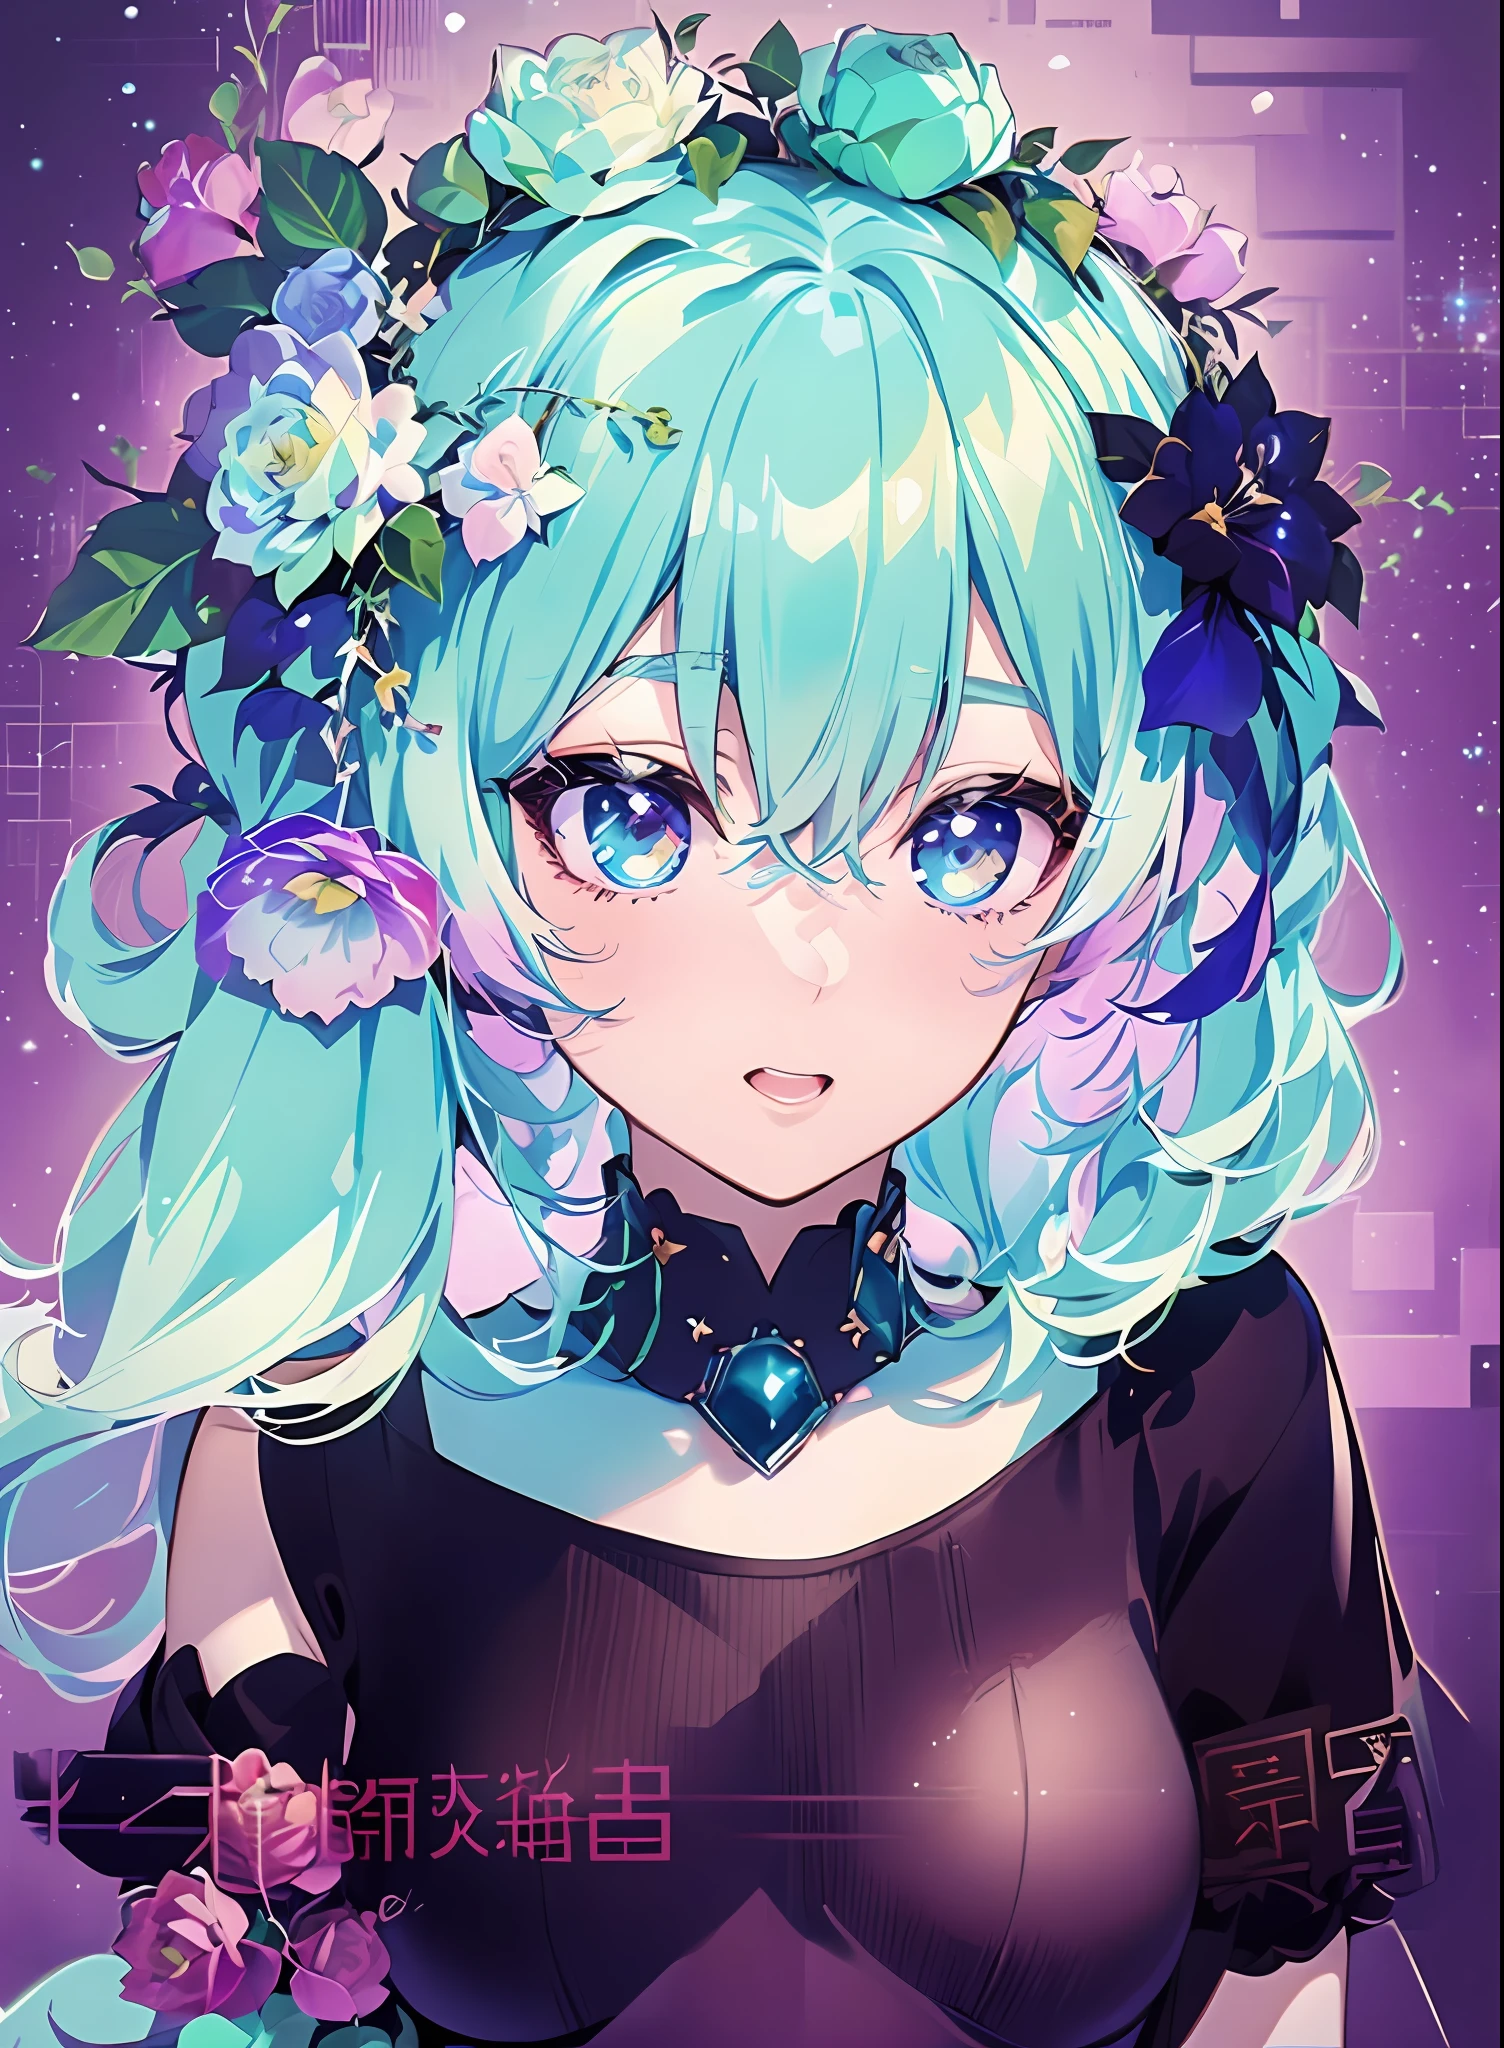 😆Andromeda_Kongacha, ((Konmutsuki_gacha_series1, punk_rosette))), cute girl, aqua color flowers, (full body), elegant flowers background